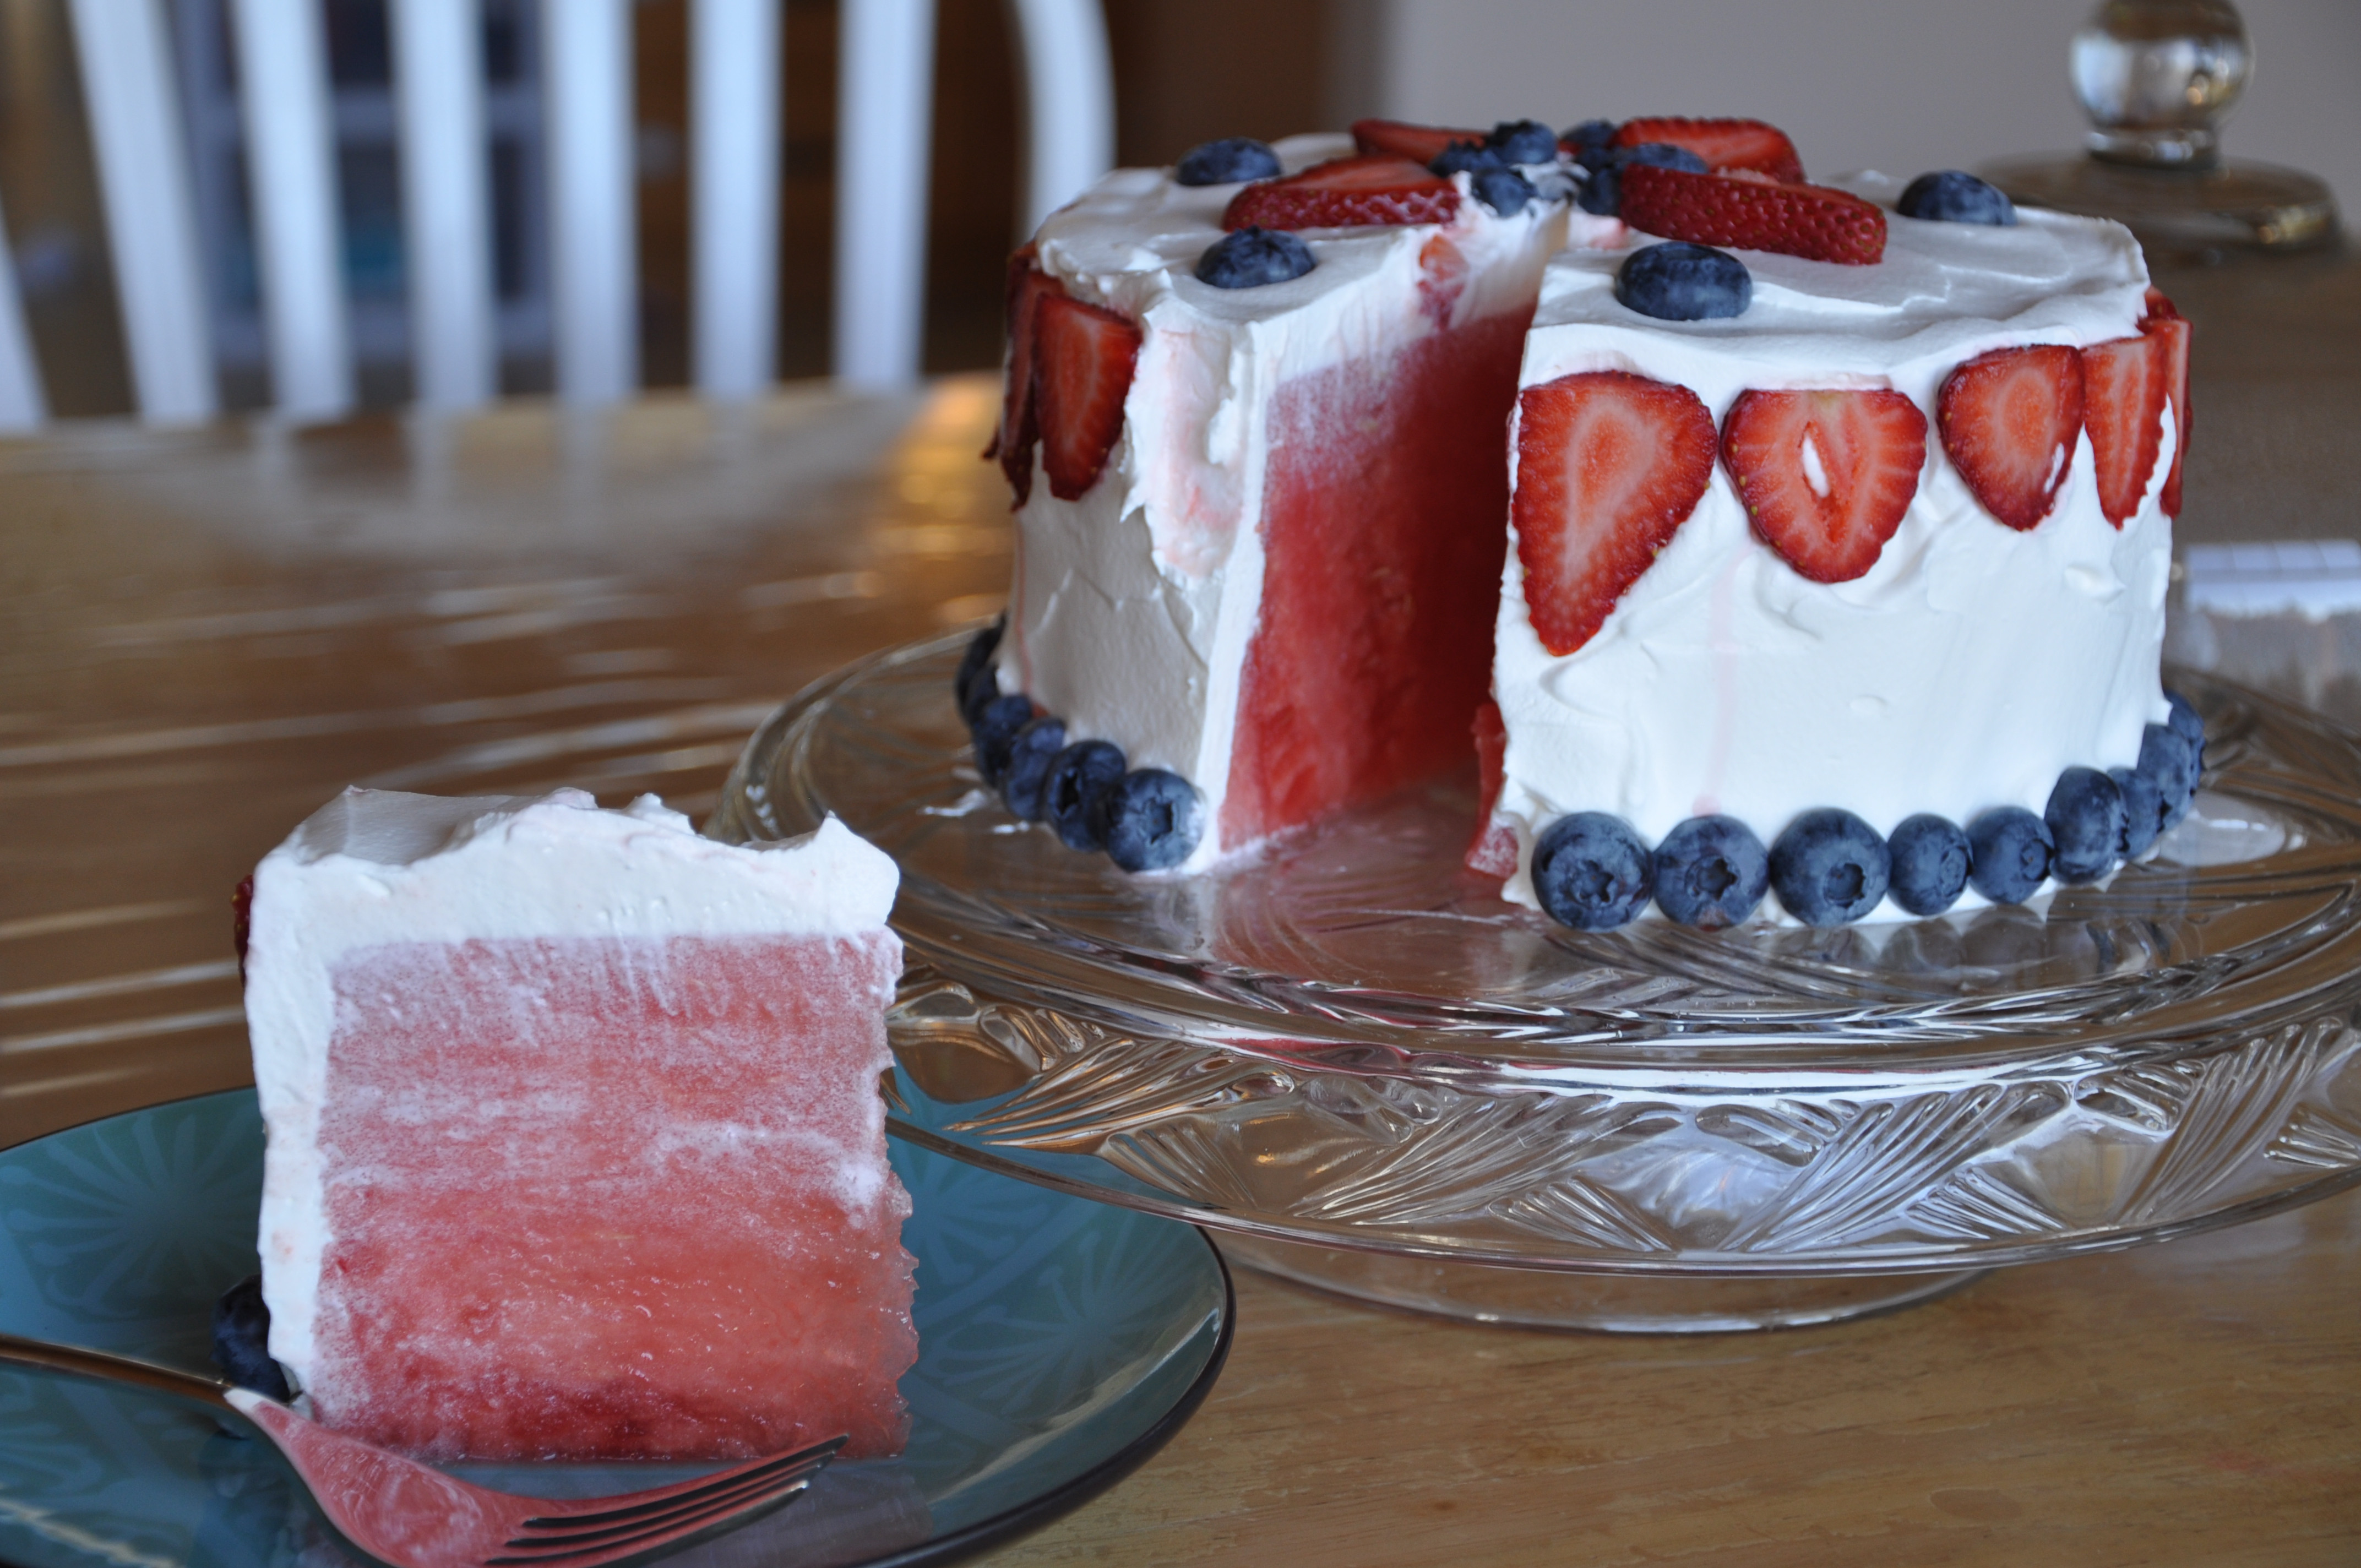 Healthy Alternatives To Birthday Cake
 Watermelon Cake Recipe Healthy Alternative to Birthday Cake